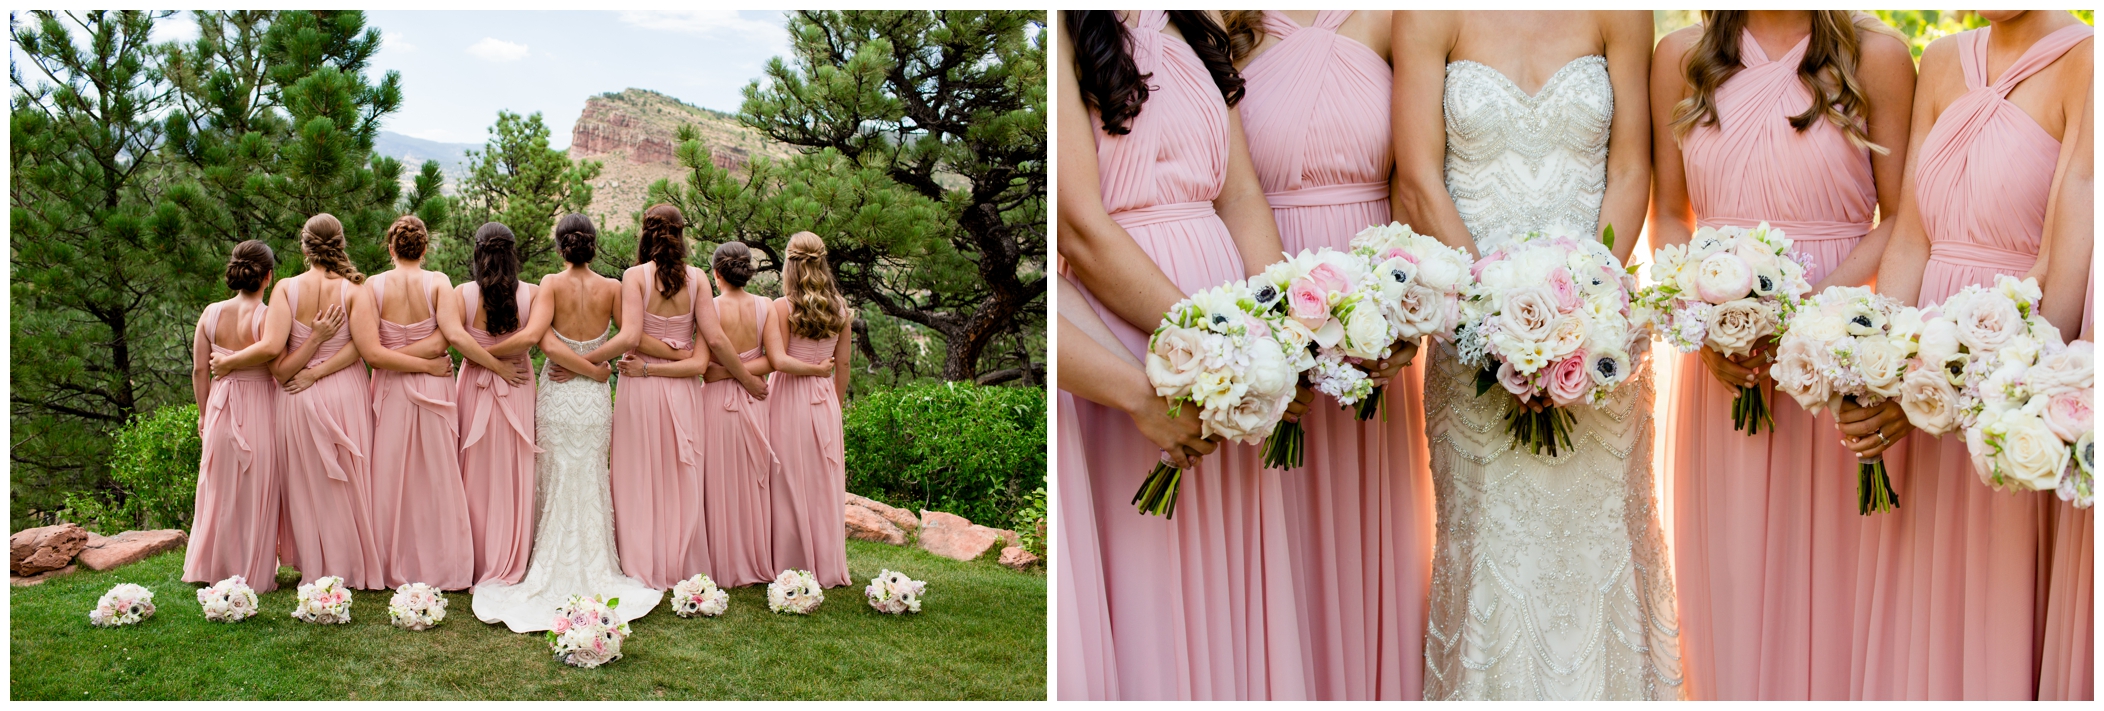 Lionscrest Manor pink wedding inspiration 